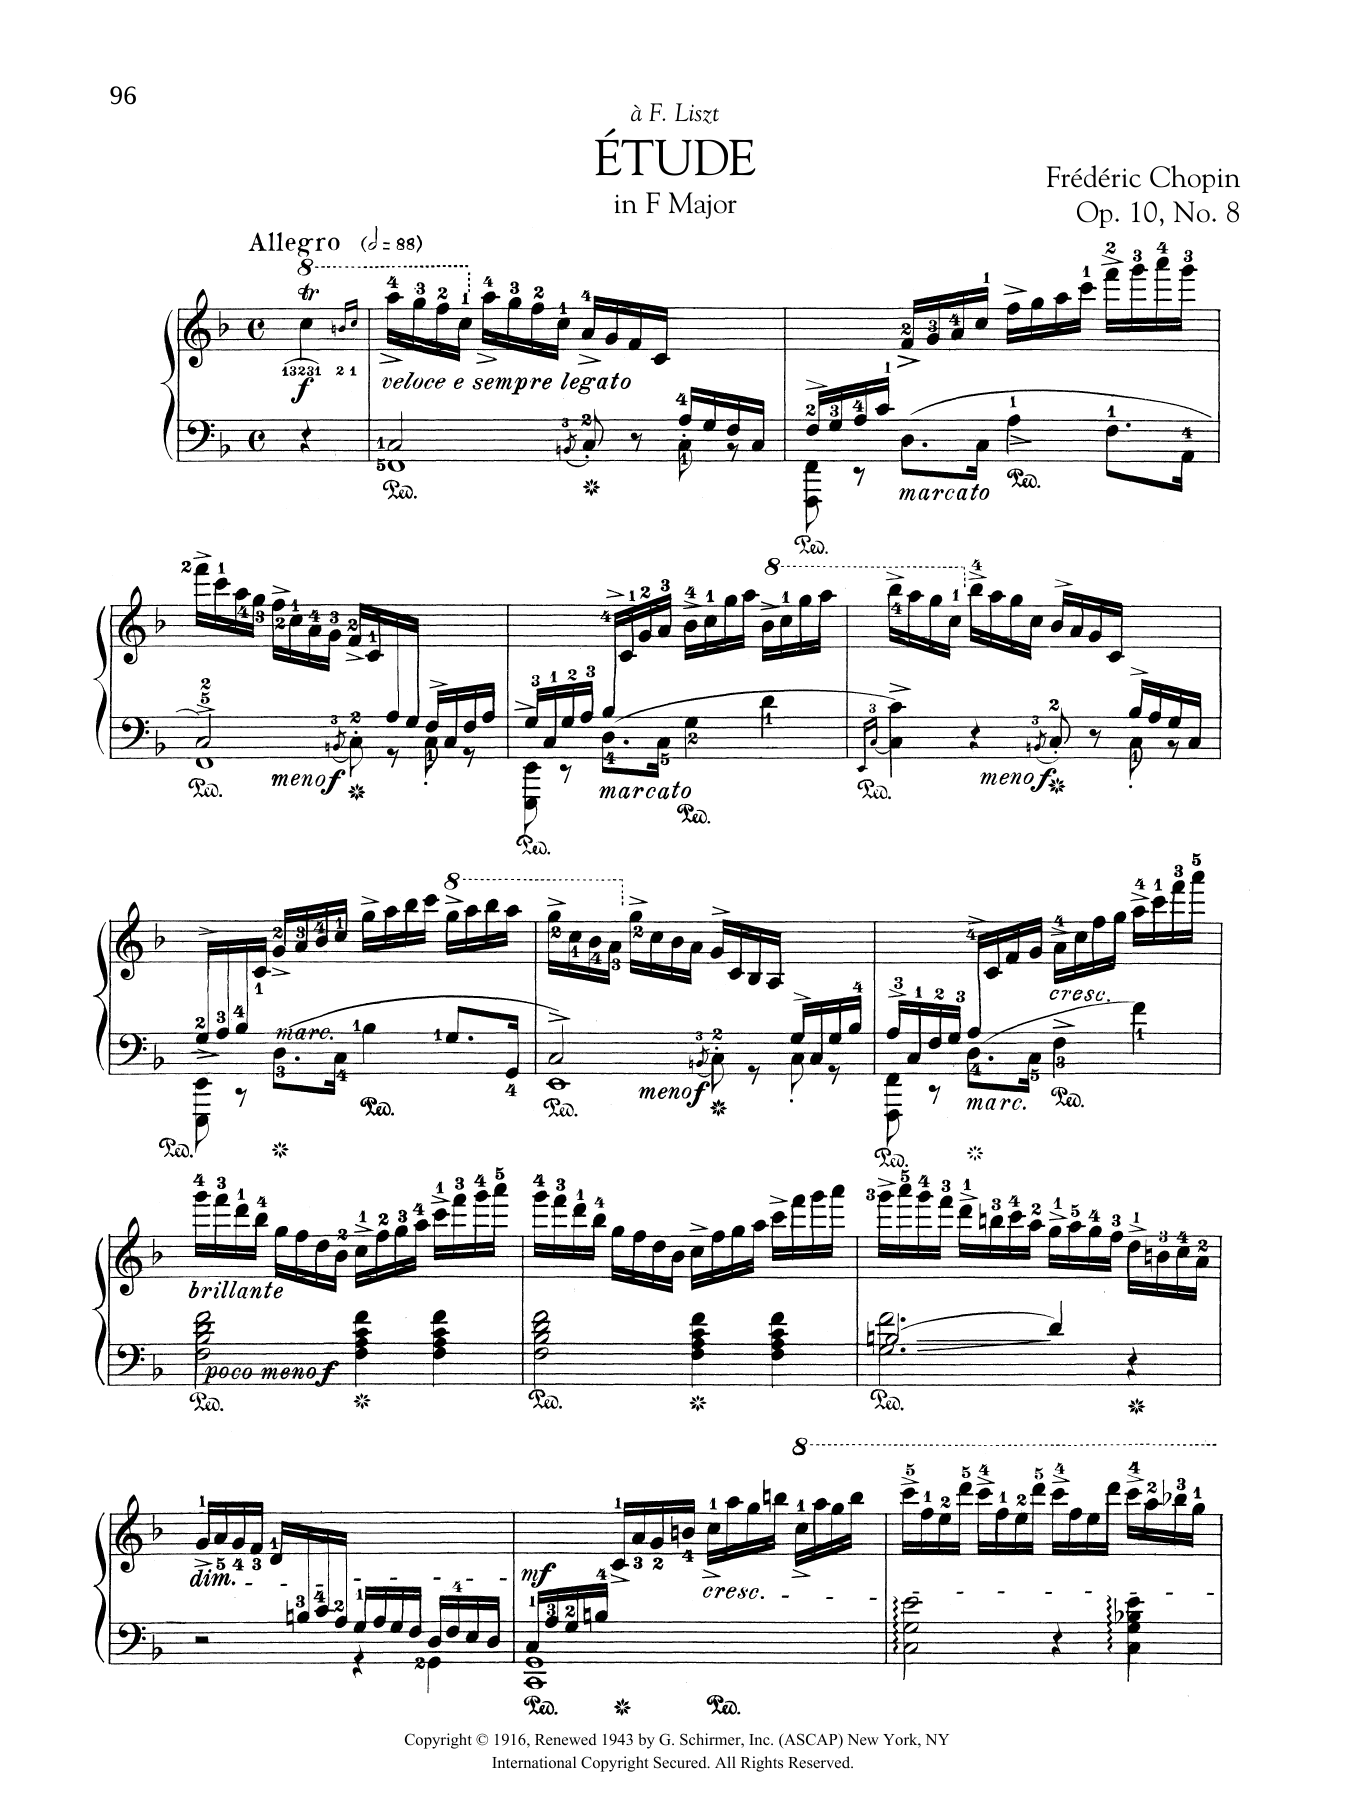 Etude in F Major, Op. 10, No. 8 sheet music